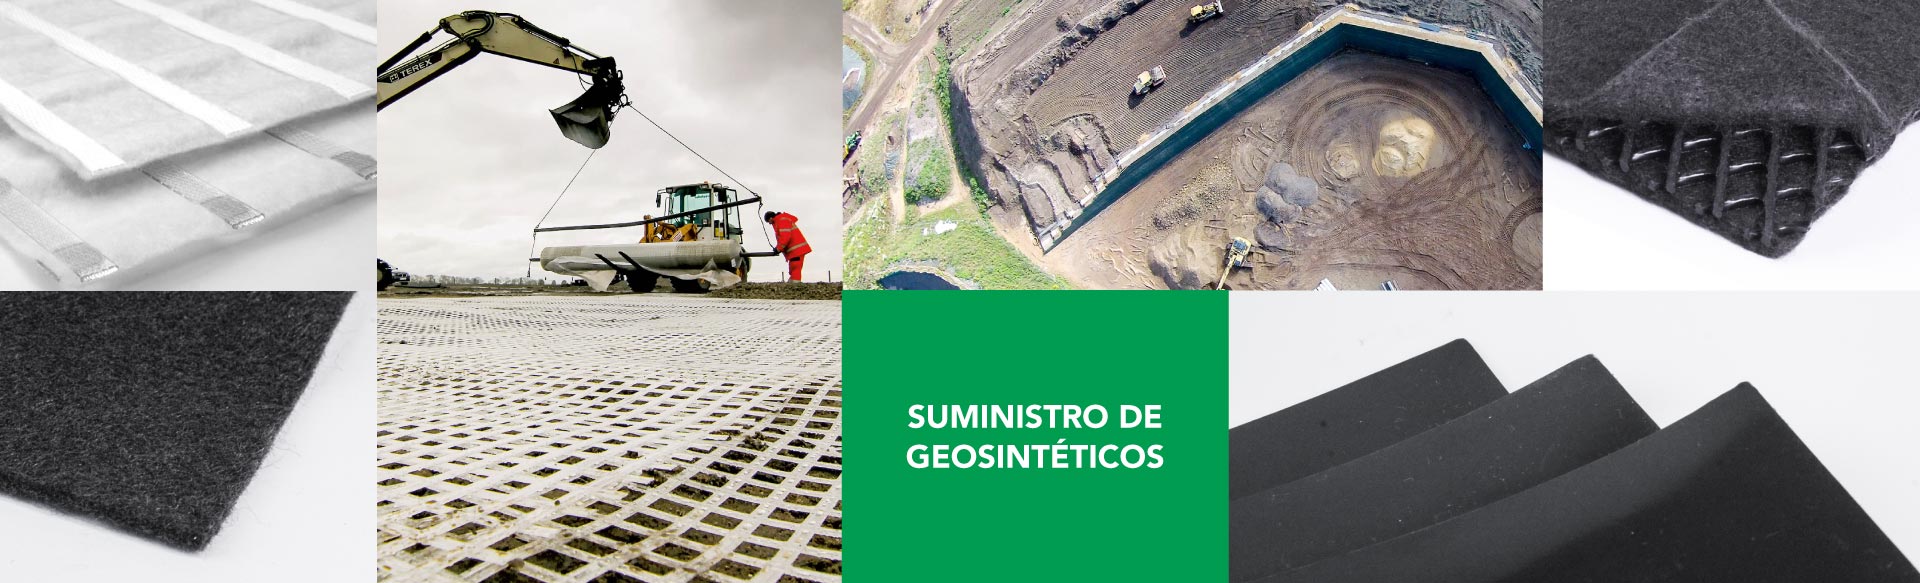 banner_suministro-geosinteticos